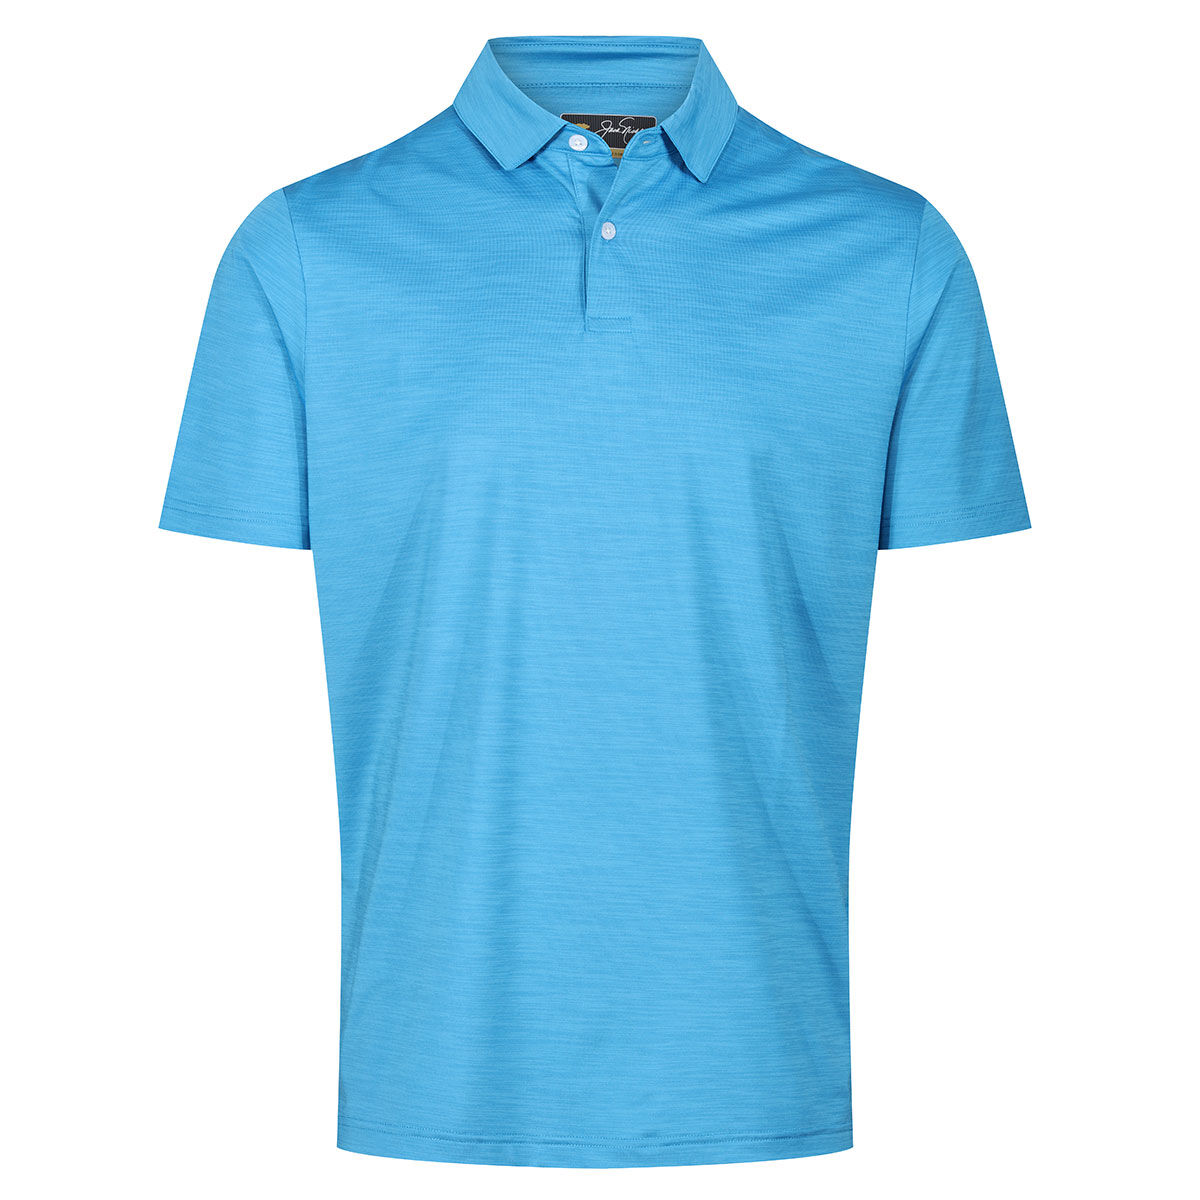 Jack Nicklaus Men's Tonal Golf Polo Shirt, Mens, Light blue, Medium | American Golf von Jack Nicklaus